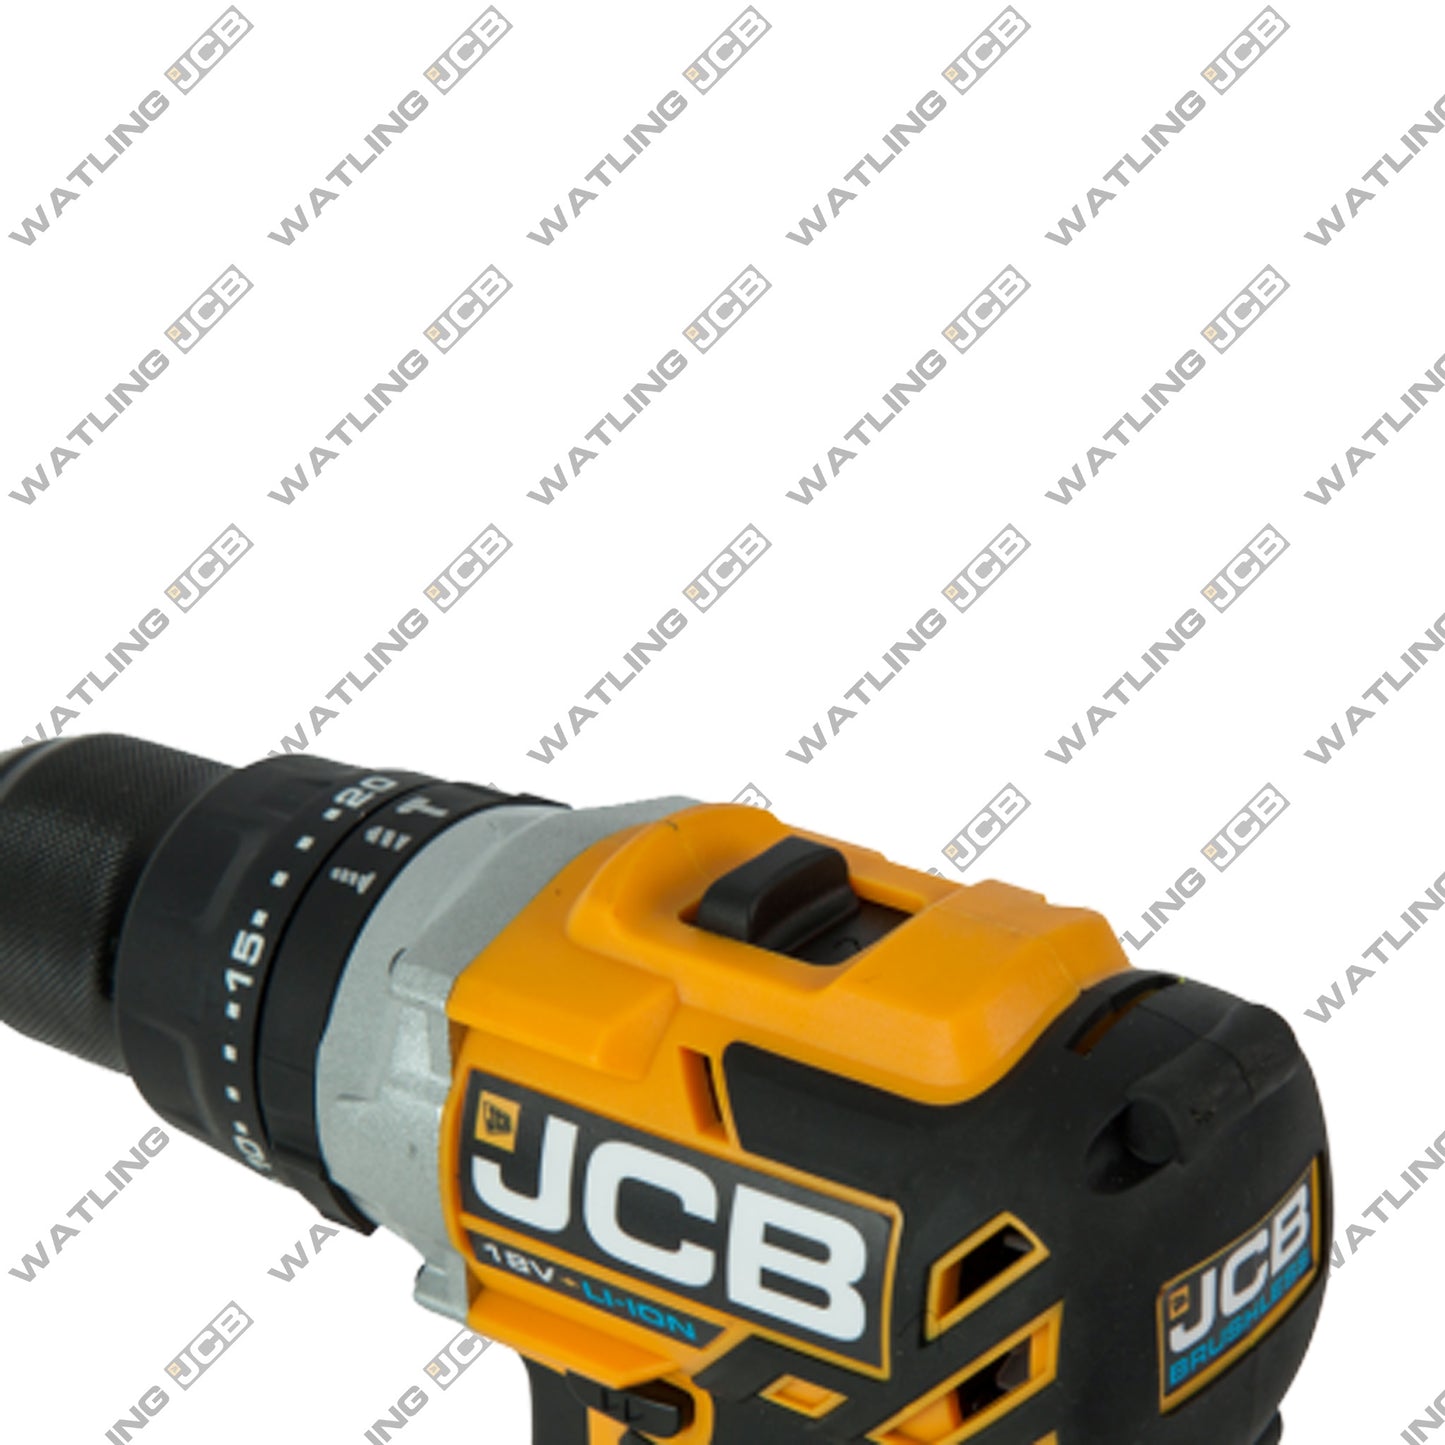 JCB 18V Brushless Combi Drill x2 5.0AH LI-ION BATTERY & 1X 18V 2.4A FAST CHARGER